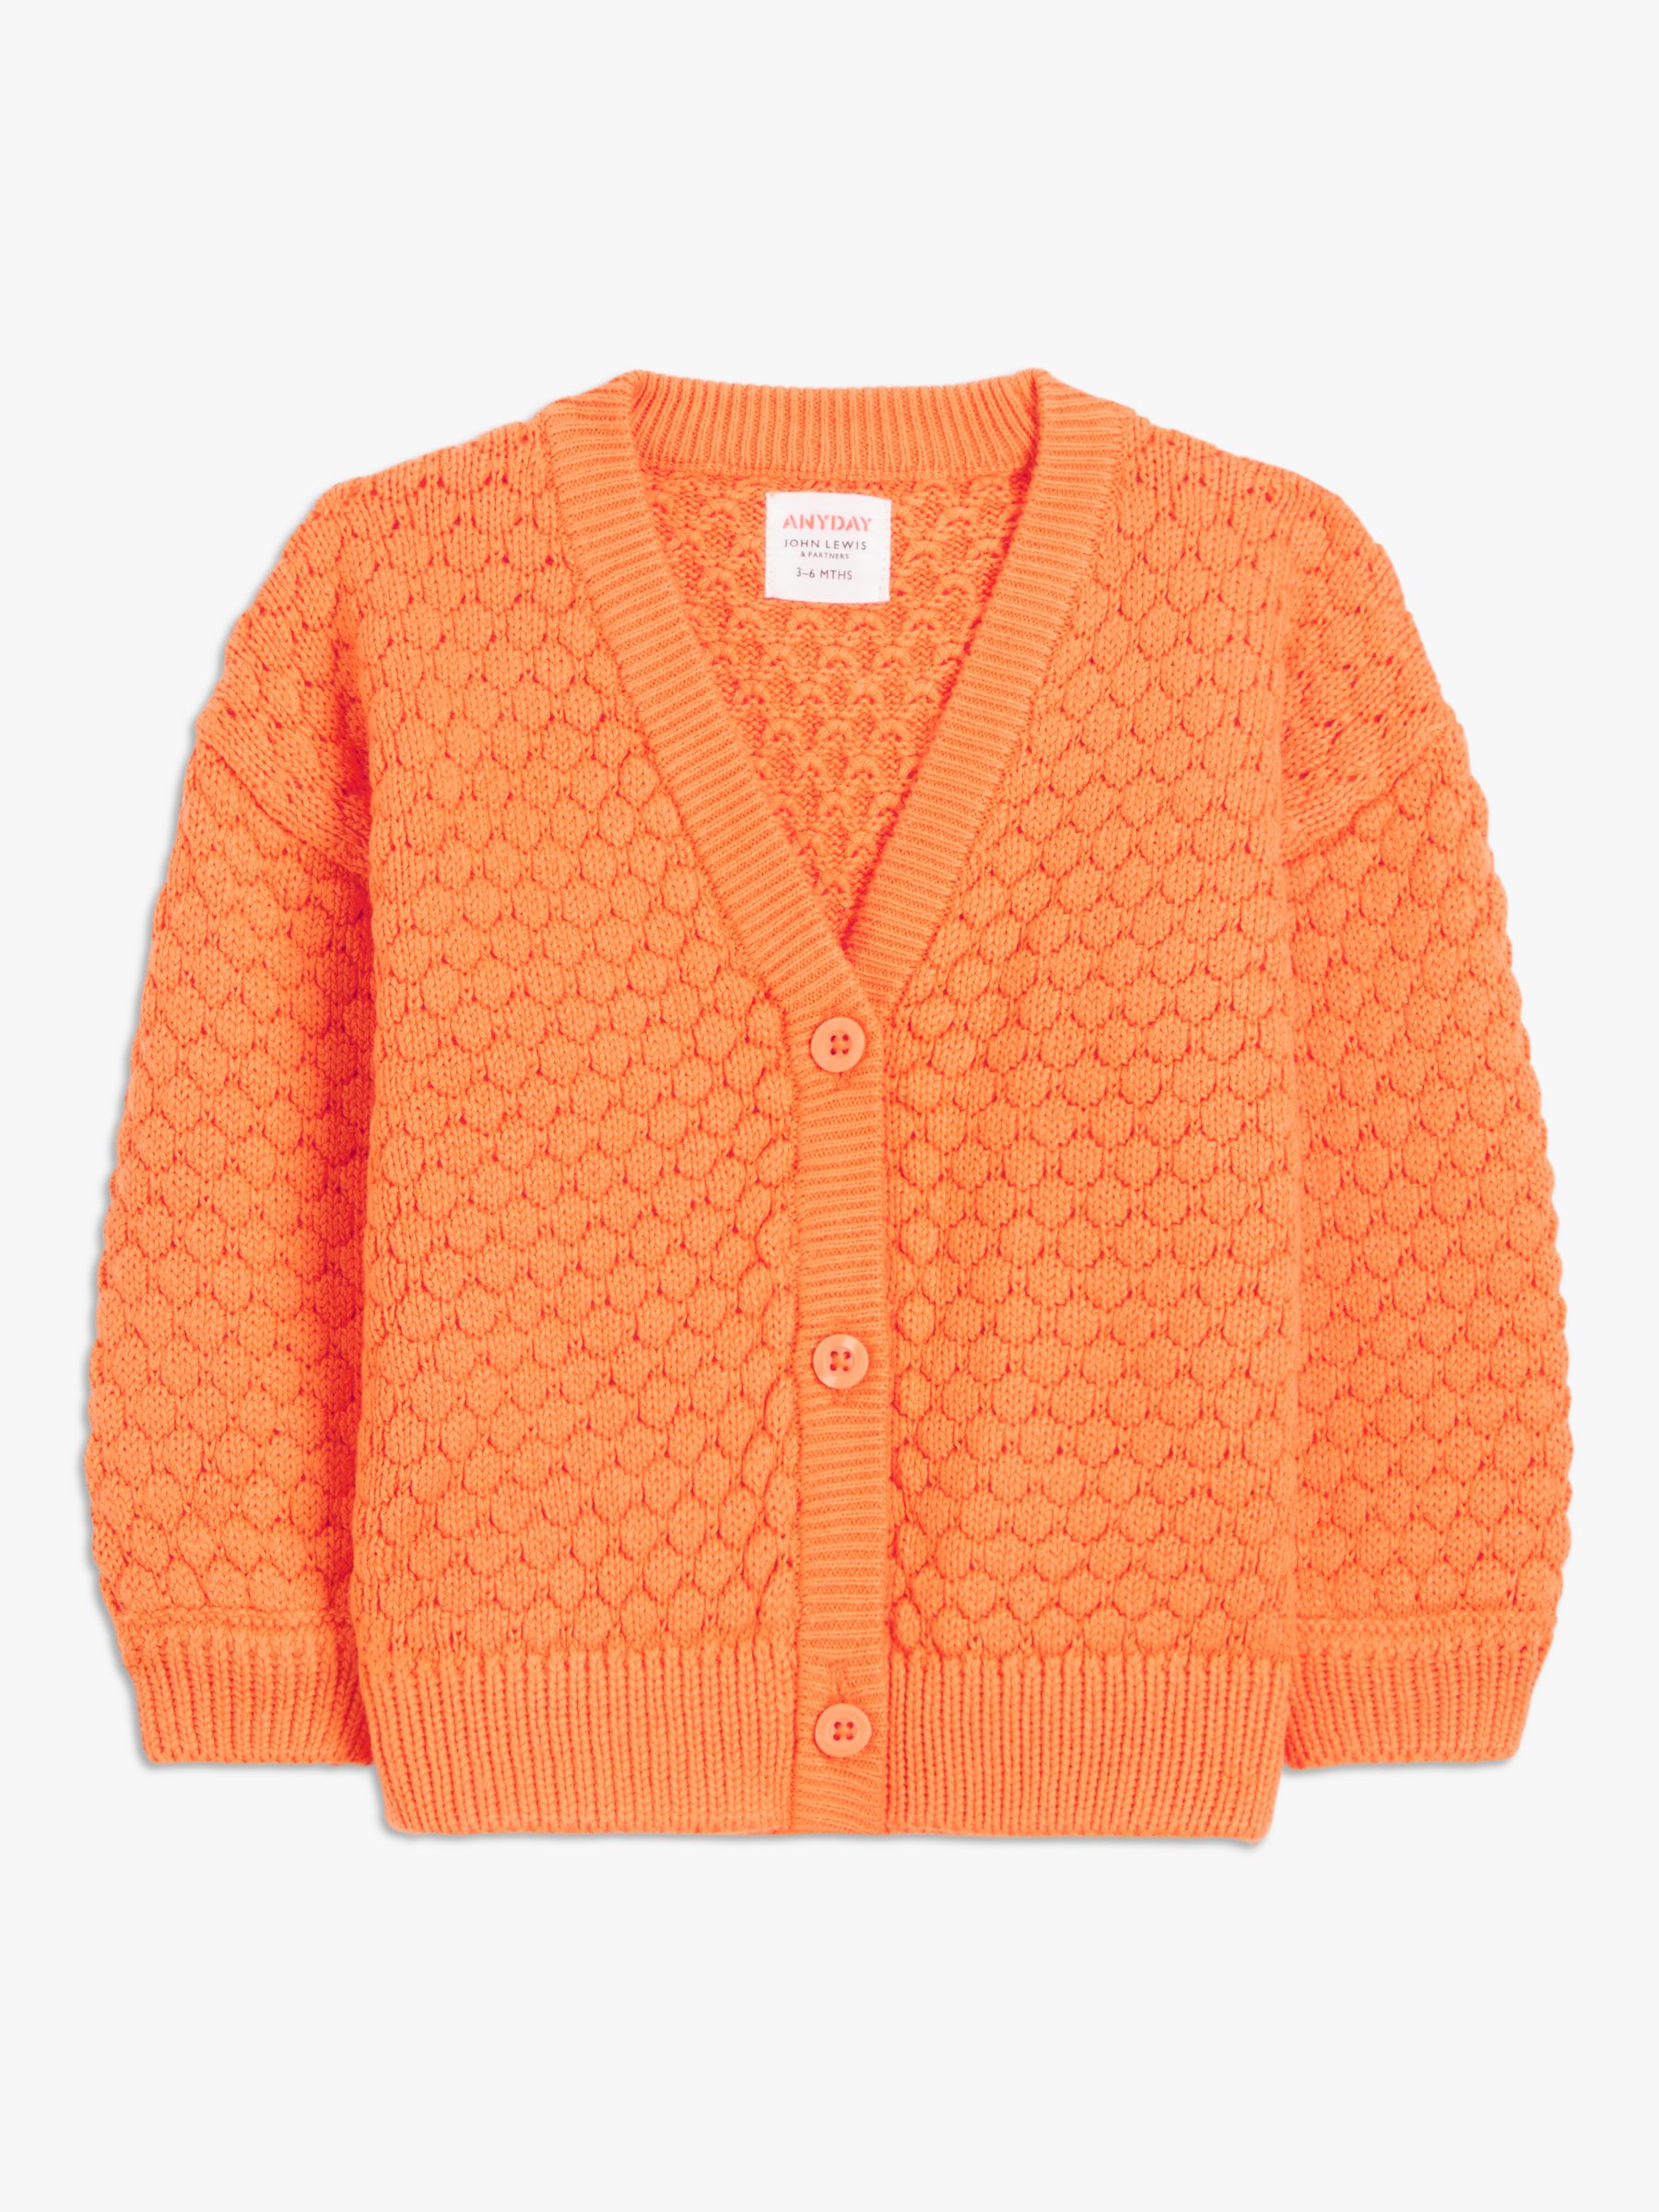 John Lewis ANYDAY Baby Cotton Blend Knitted Cardigan, Orange, 3-6 months